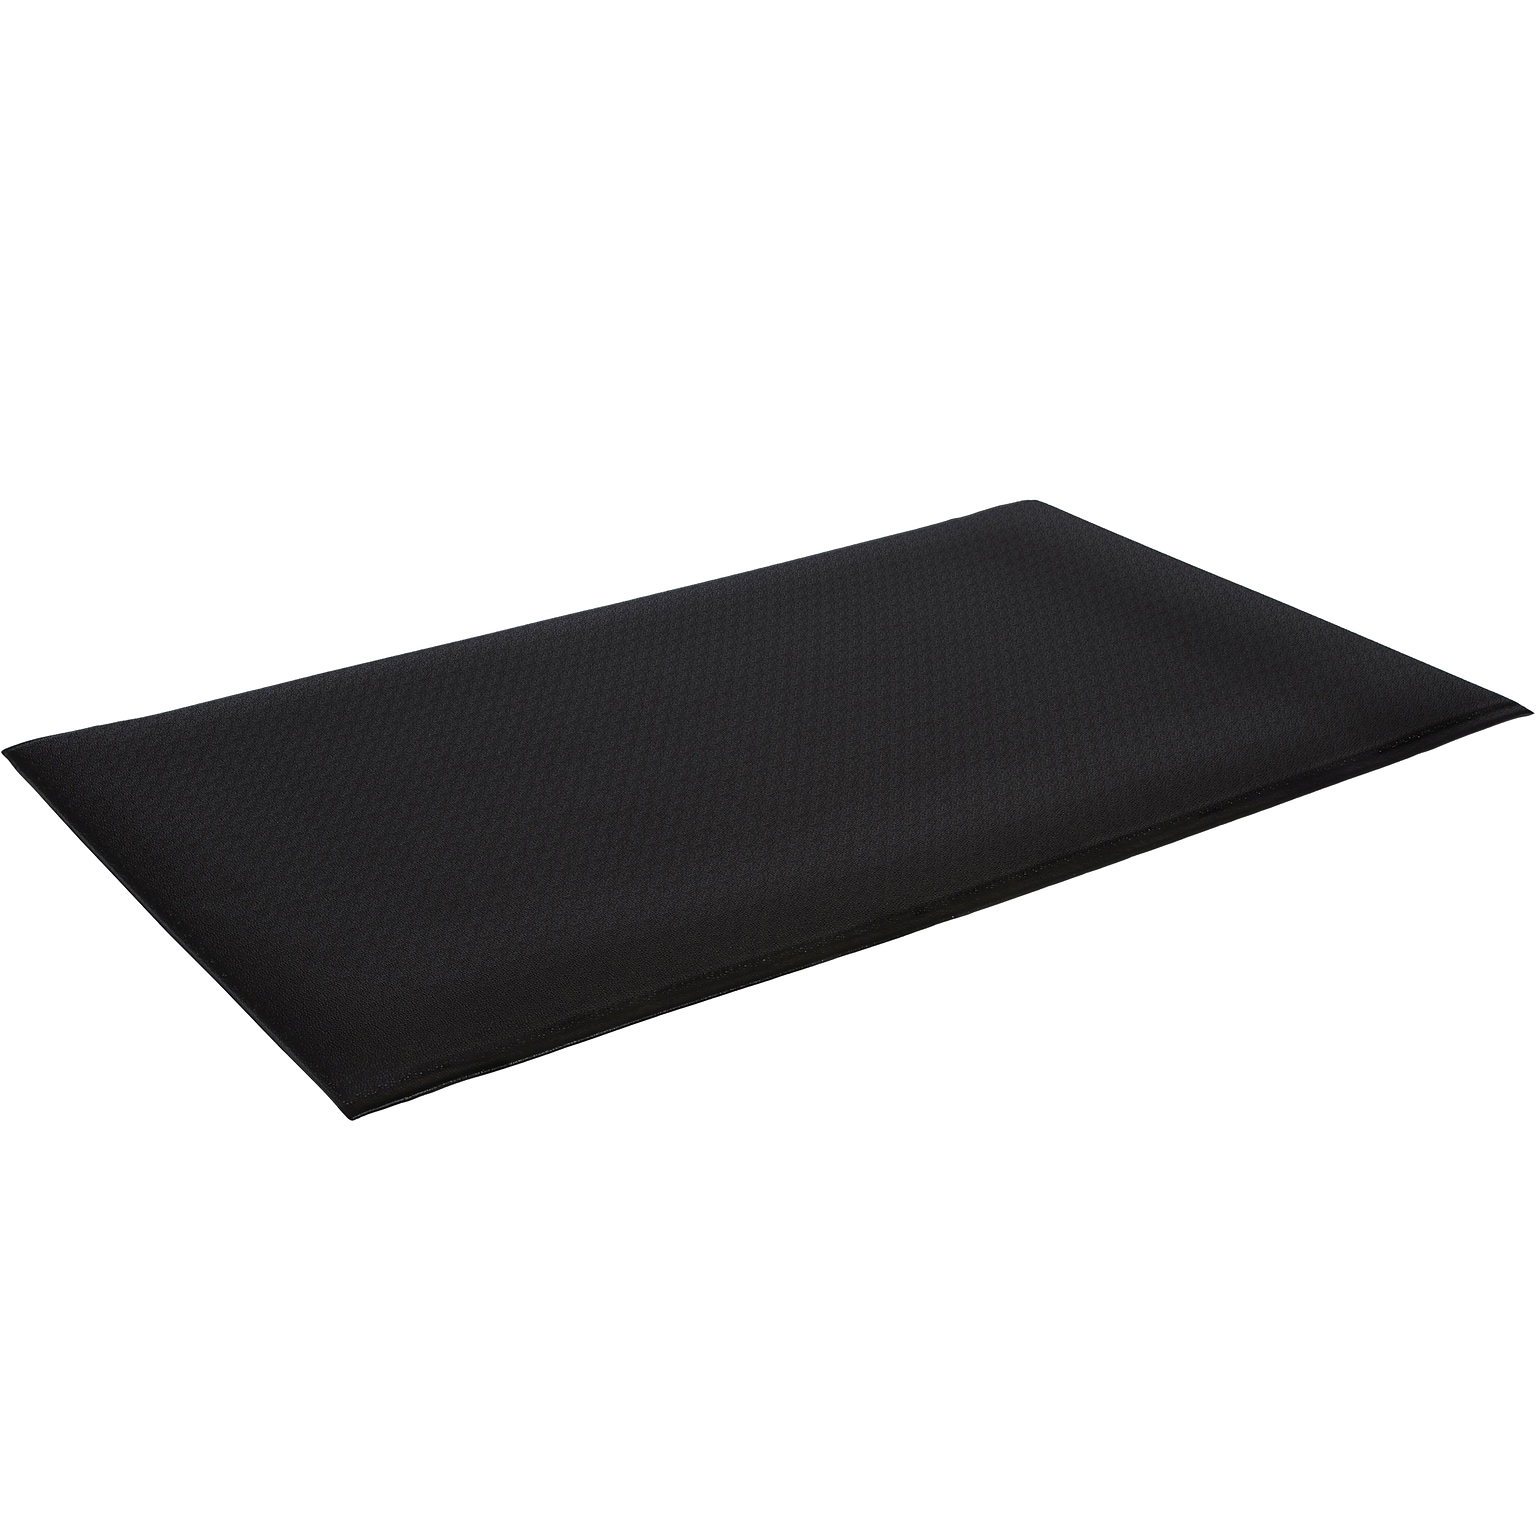 Crown Mats Wear-Bond Comfort-King Anti-Fatigue Mat, 36 x 60, Black (WB Z035KP)